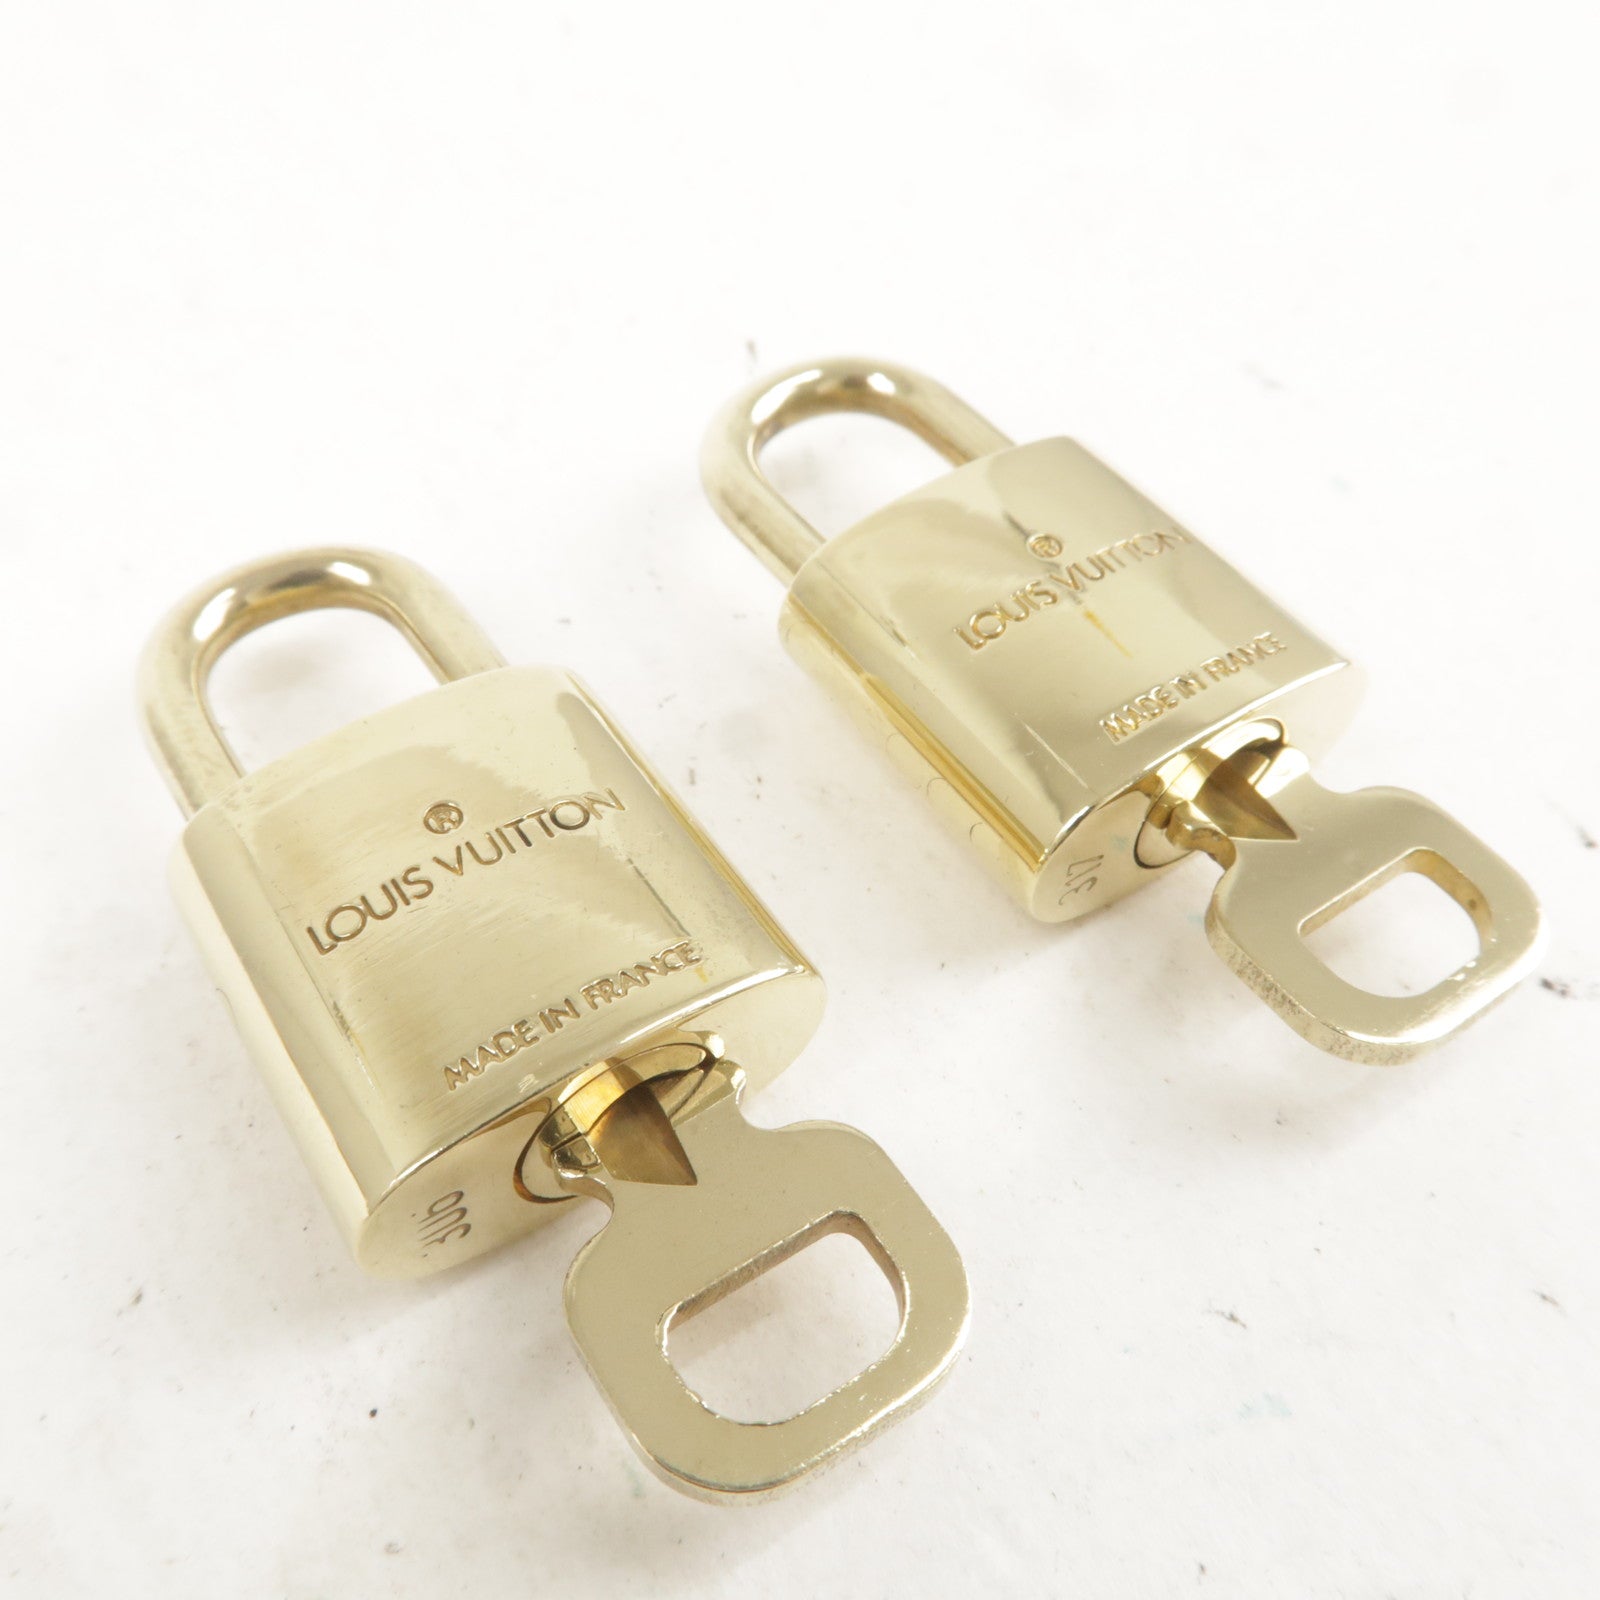 lv lock and key